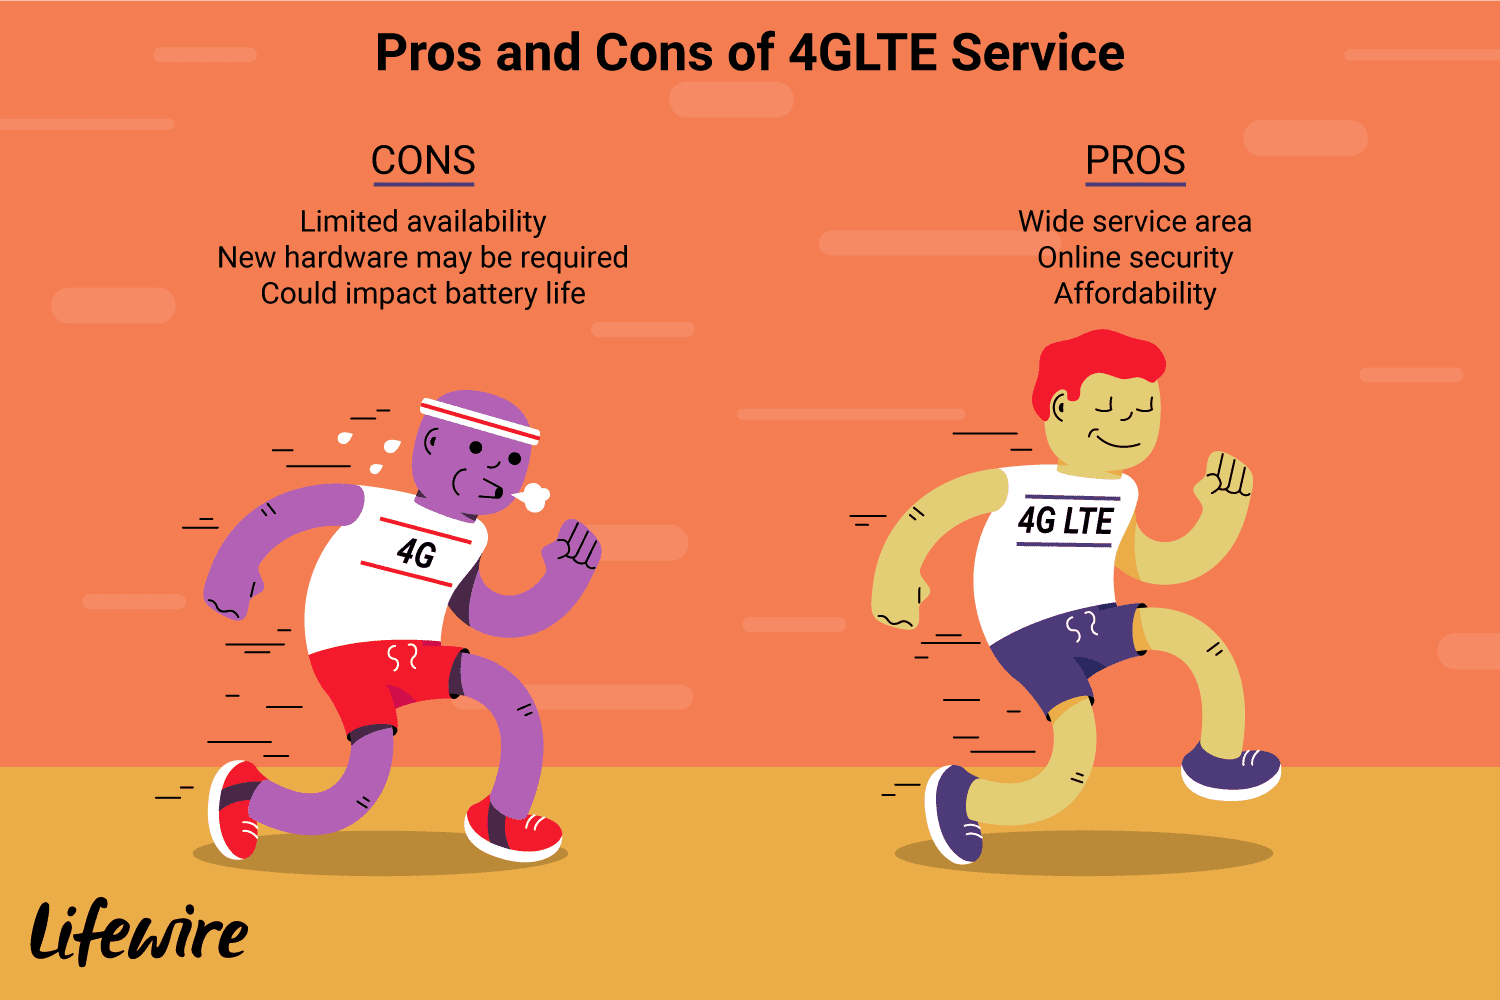 Иллюстрация плюсов и минусов услуги 4G LTE